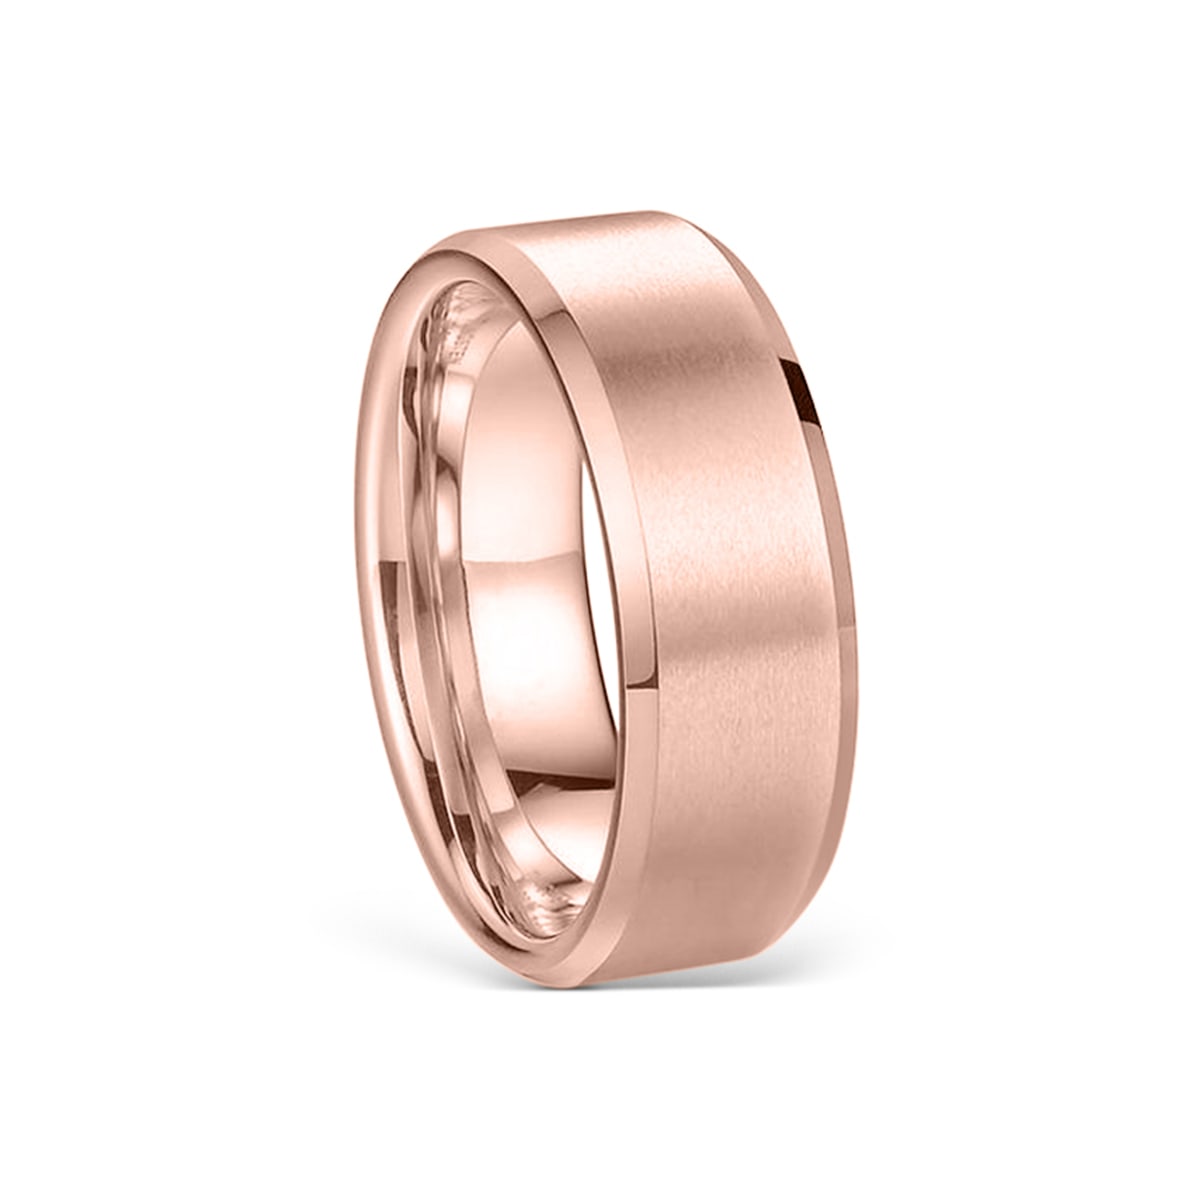 the titan rose gold mens wedding ring